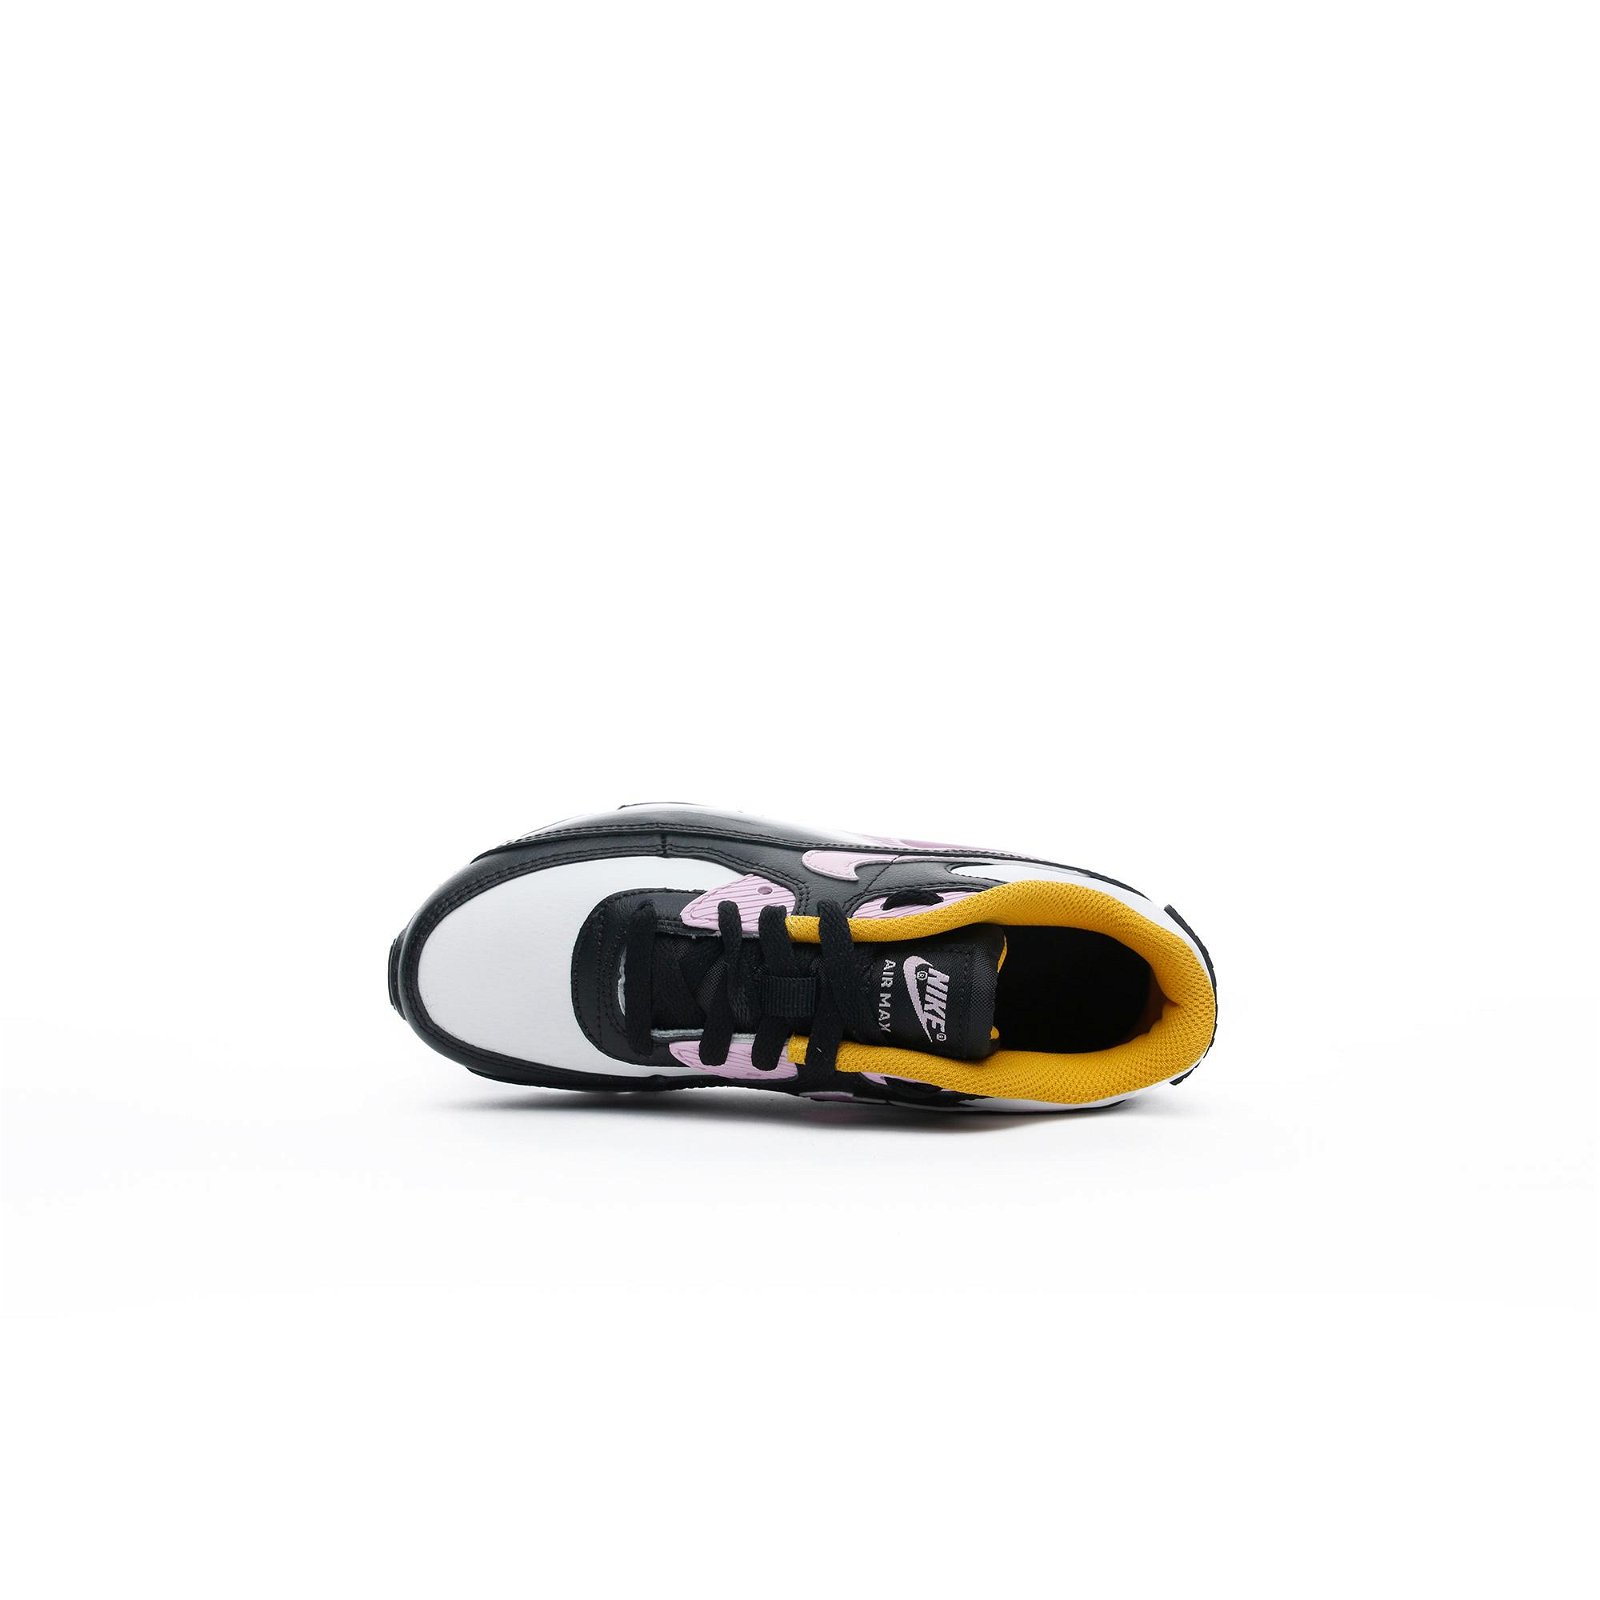 Nike Air Max 90 LTR Siyah-Mor Spor Ayakkabı